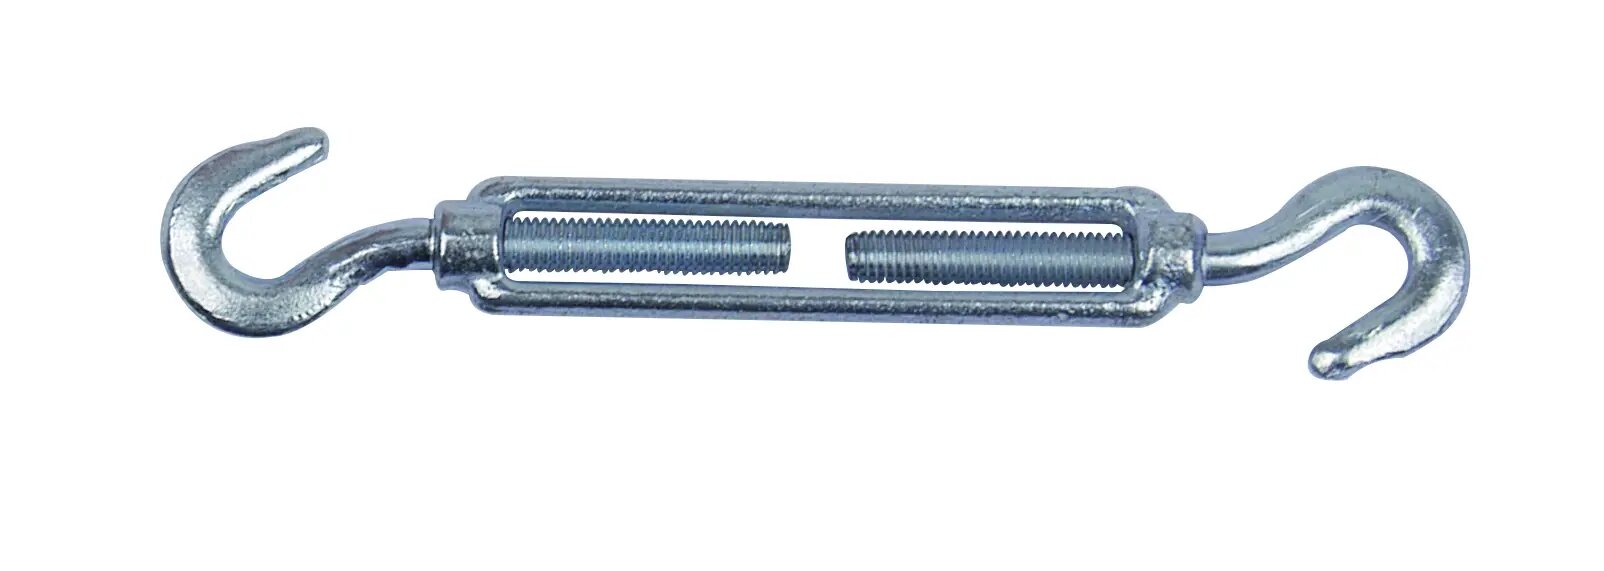 Талреп крюк-крюк Standers М6, 60 кг, оцинкованная сталь - фотография № 4